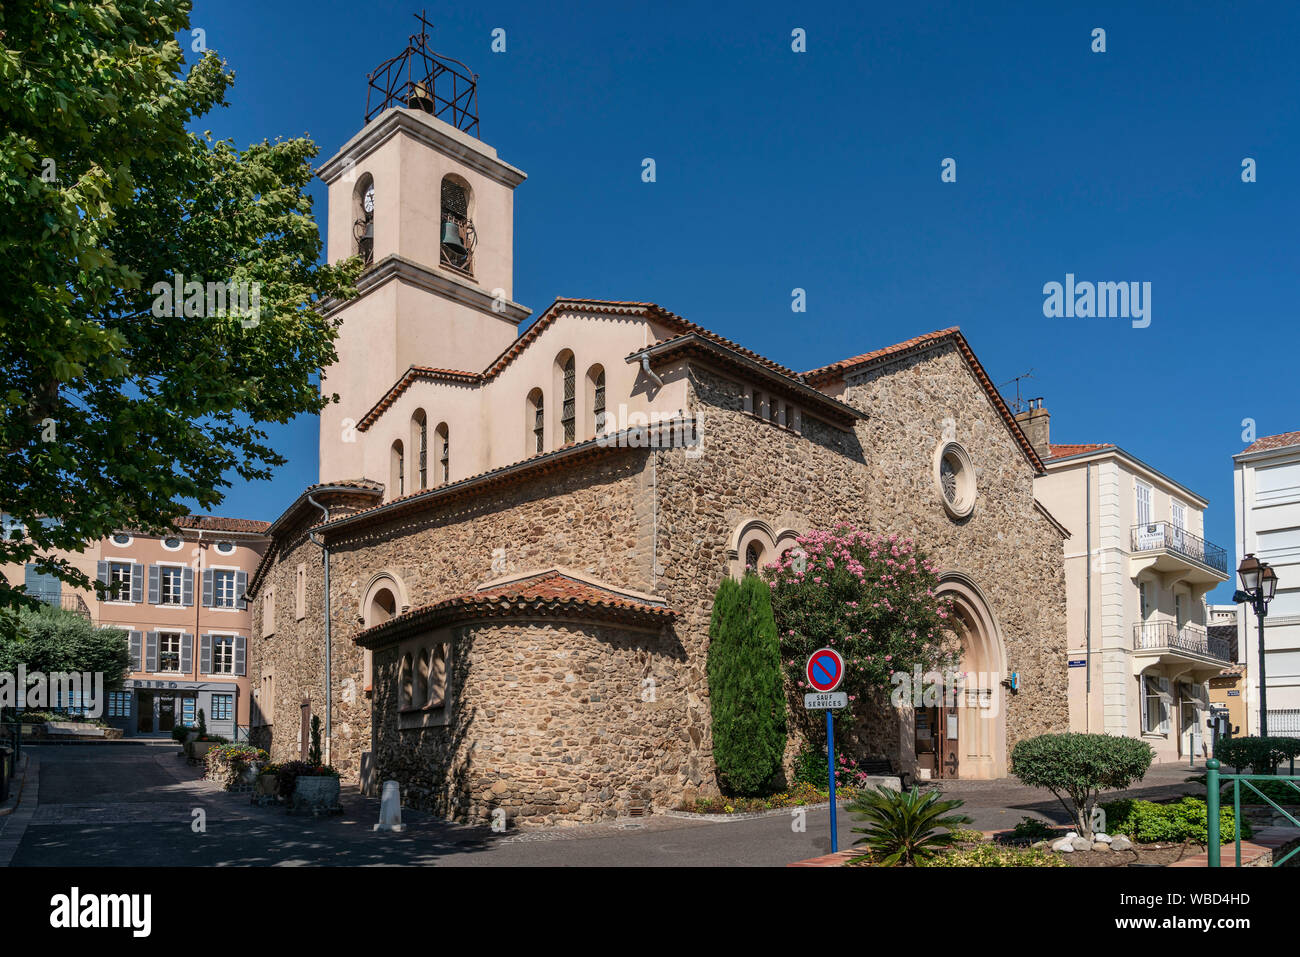 Eglise Sainte-Maxime, Sainte-Maxime, Cote d Azur, france Stock Photo